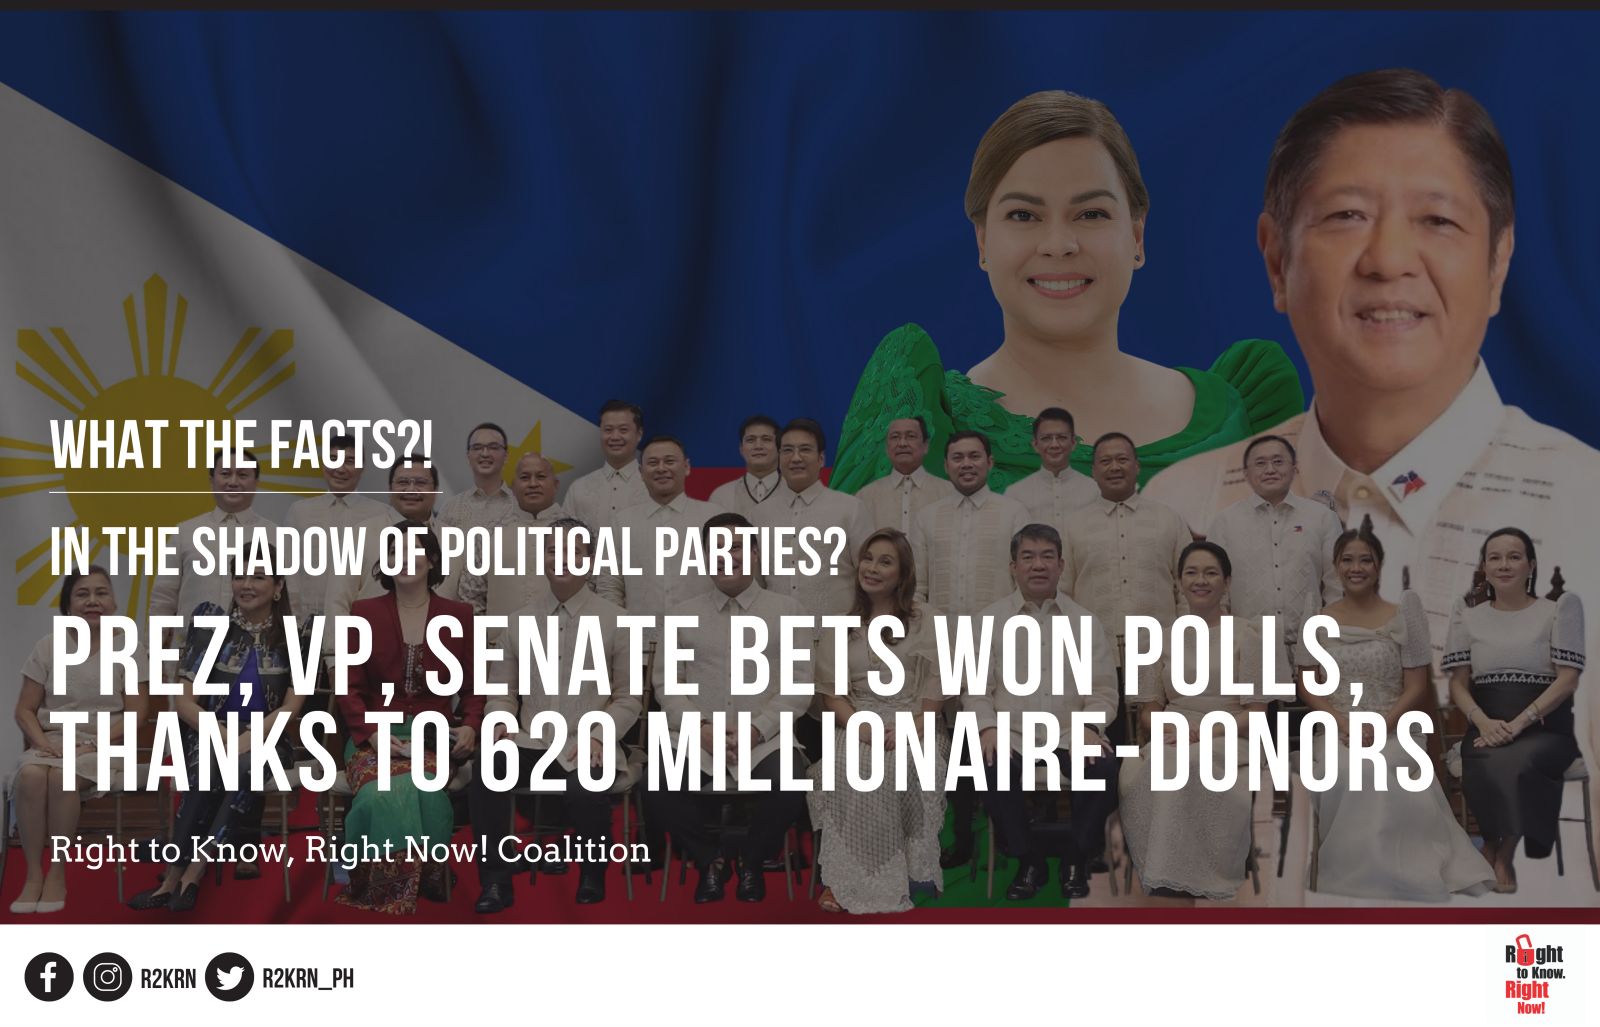 Prez, VP, Senate bets won polls, thanks to 620 millionaire-donors